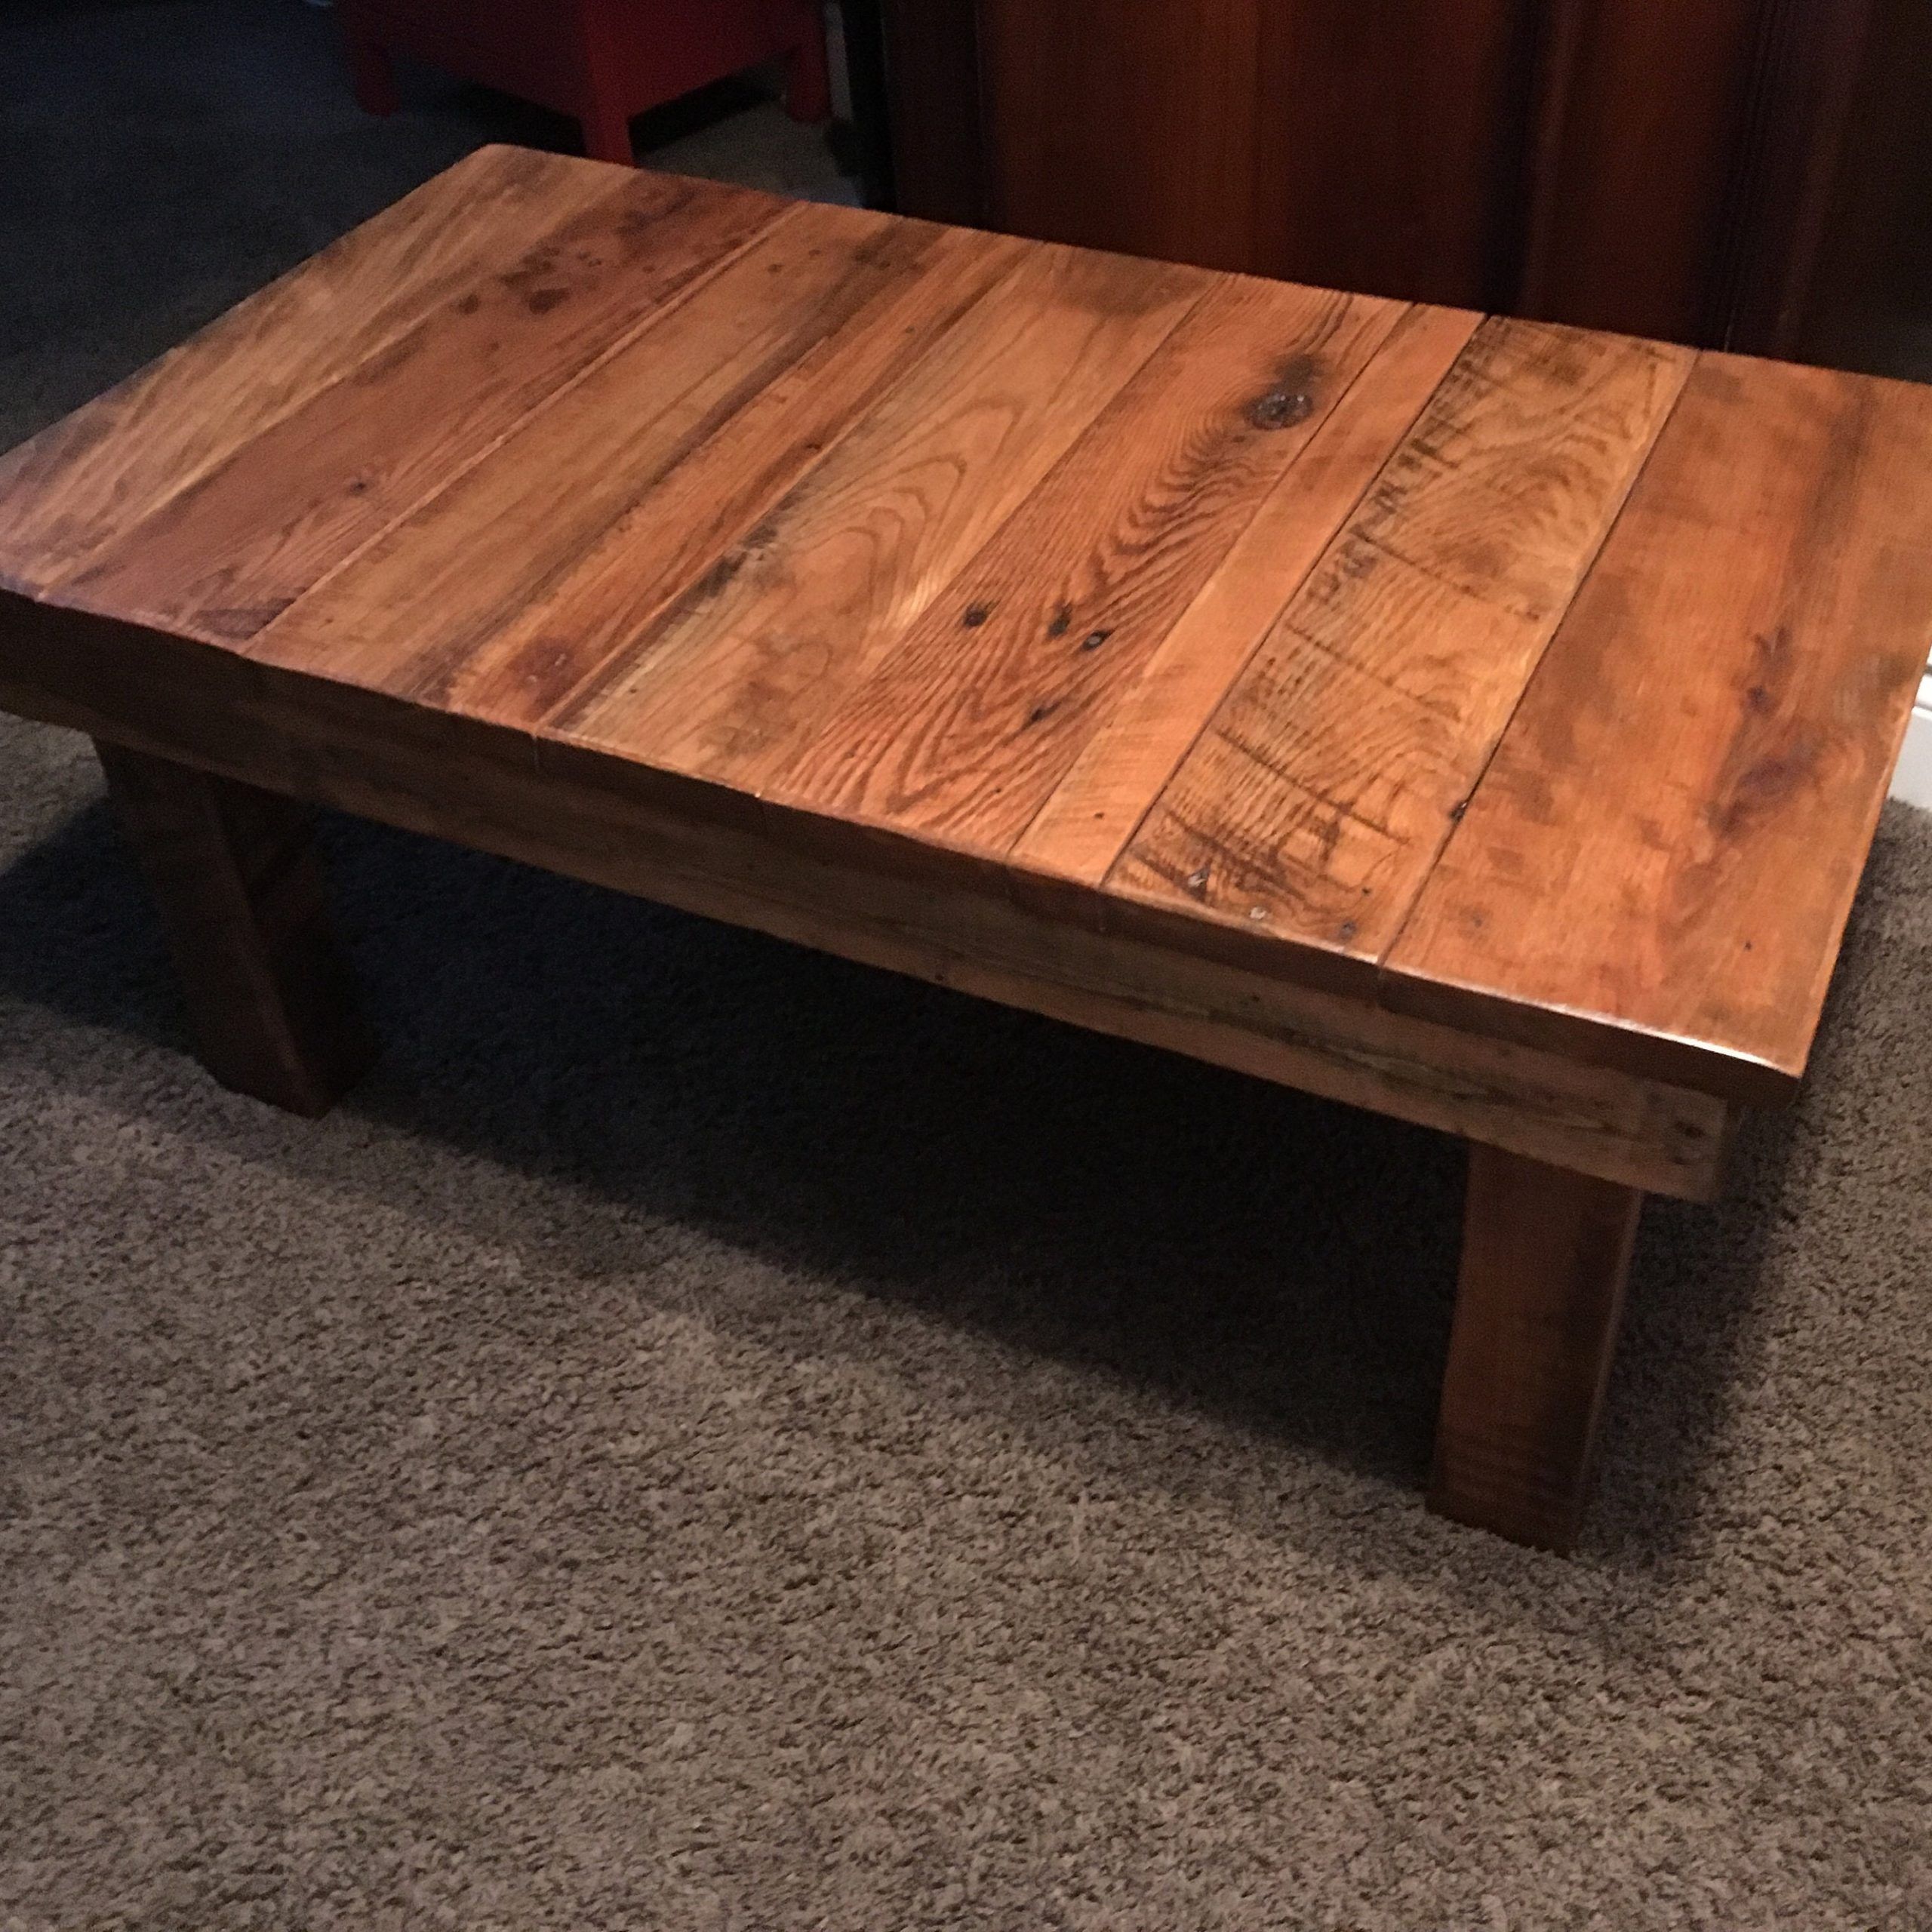 Reclaimed Wood Rustic Coffee Table Inside Barnwood Coffee Tables (View 7 of 15)